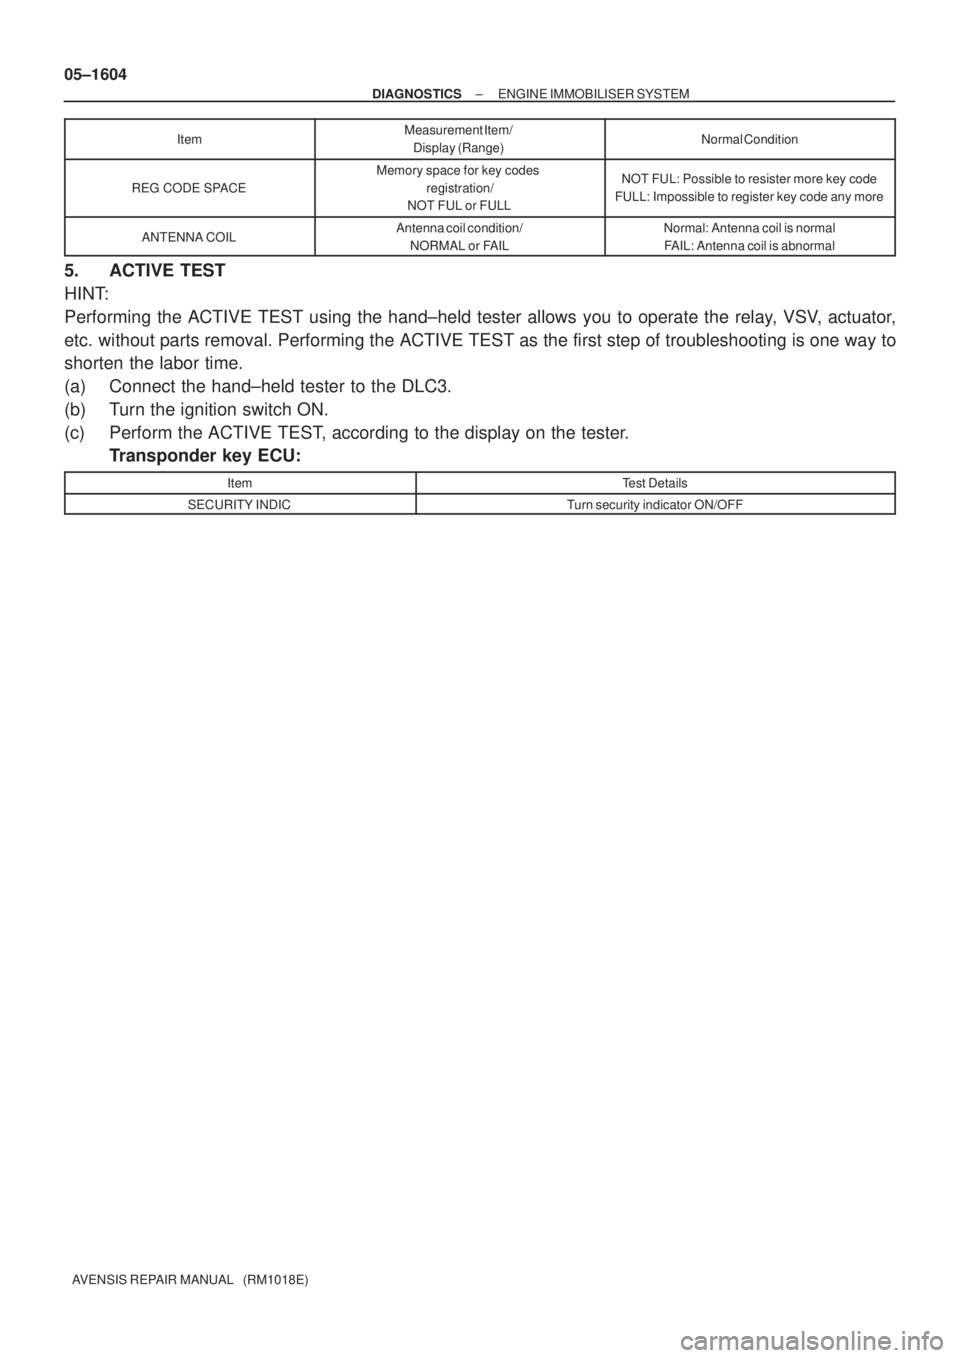 TOYOTA AVENSIS 2005  Service Repair Manual 05±1604
± DIAGNOSTICSENGINE IMMOBILISER SYSTEM
AVENSIS REPAIR MANUAL   (RM1018E)ItemNormal Condition Measurement Item/
Display (Range)
REG CODE SPACE
Memory space for key codes 
registration/
NOT FU